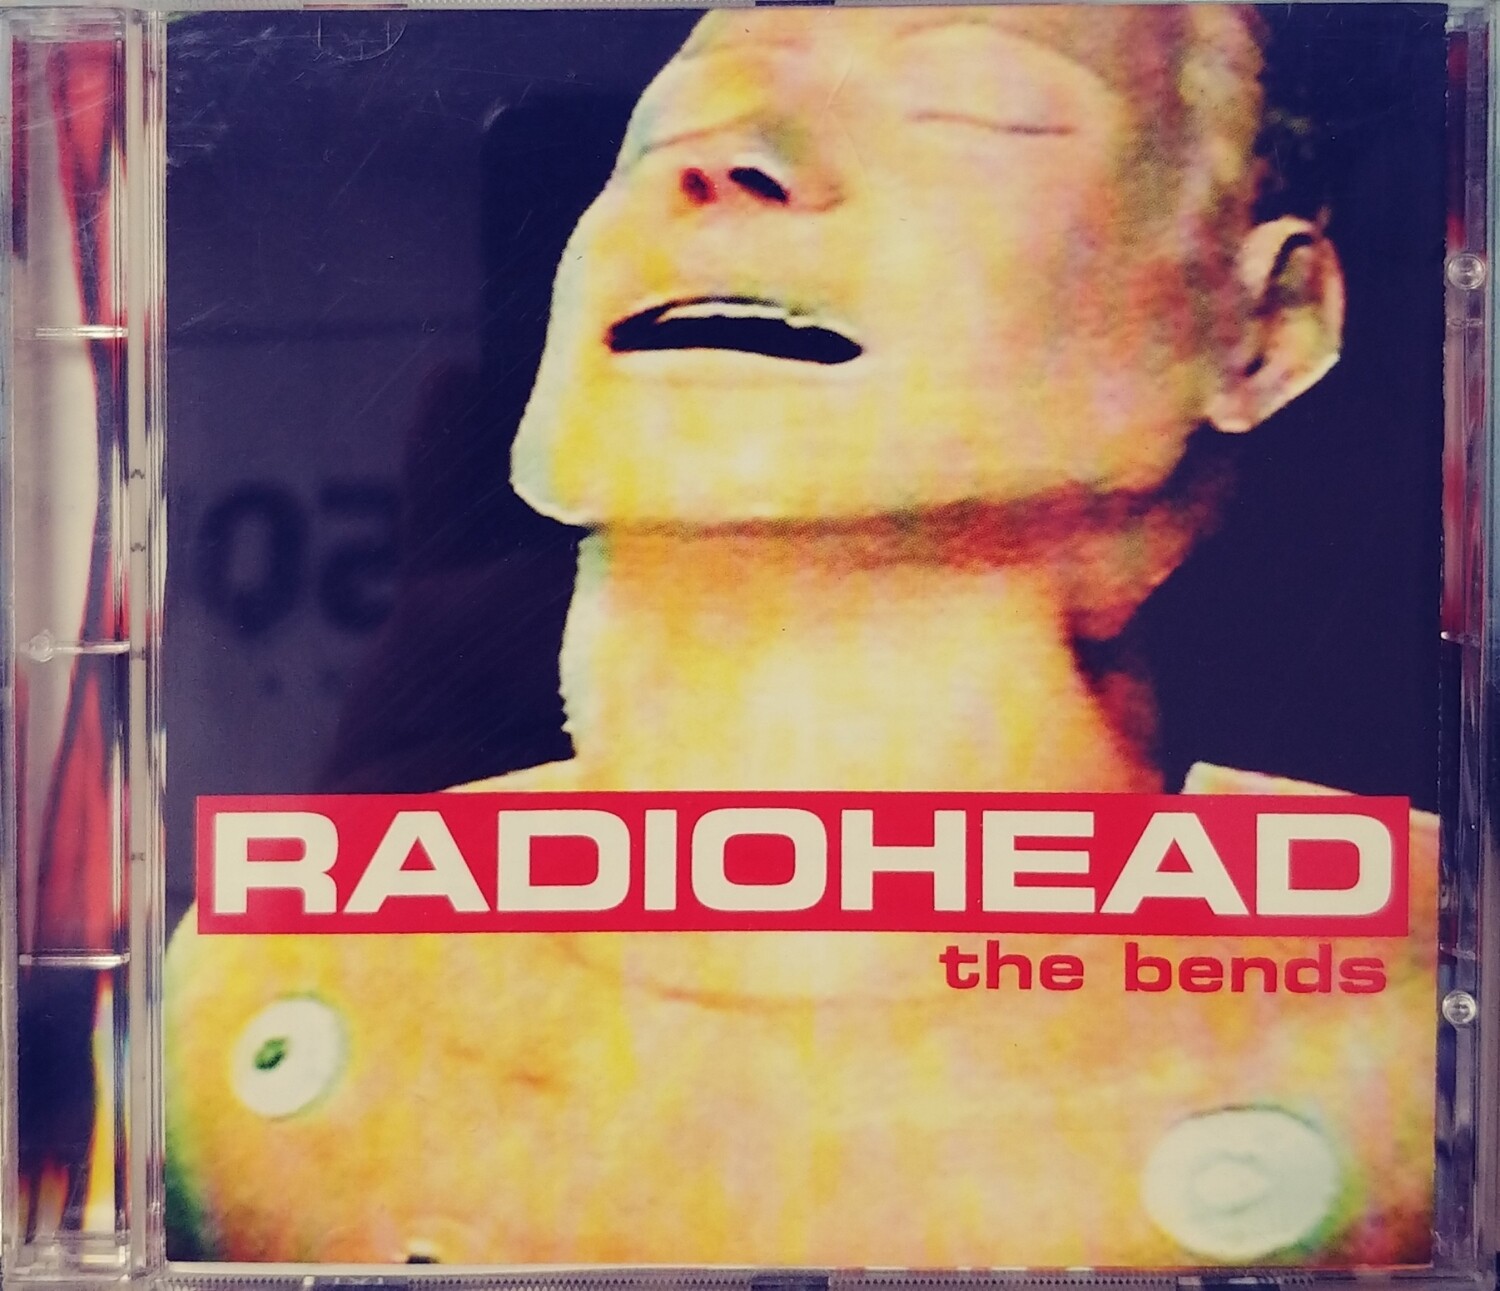 Radiohead - The bends (CD)